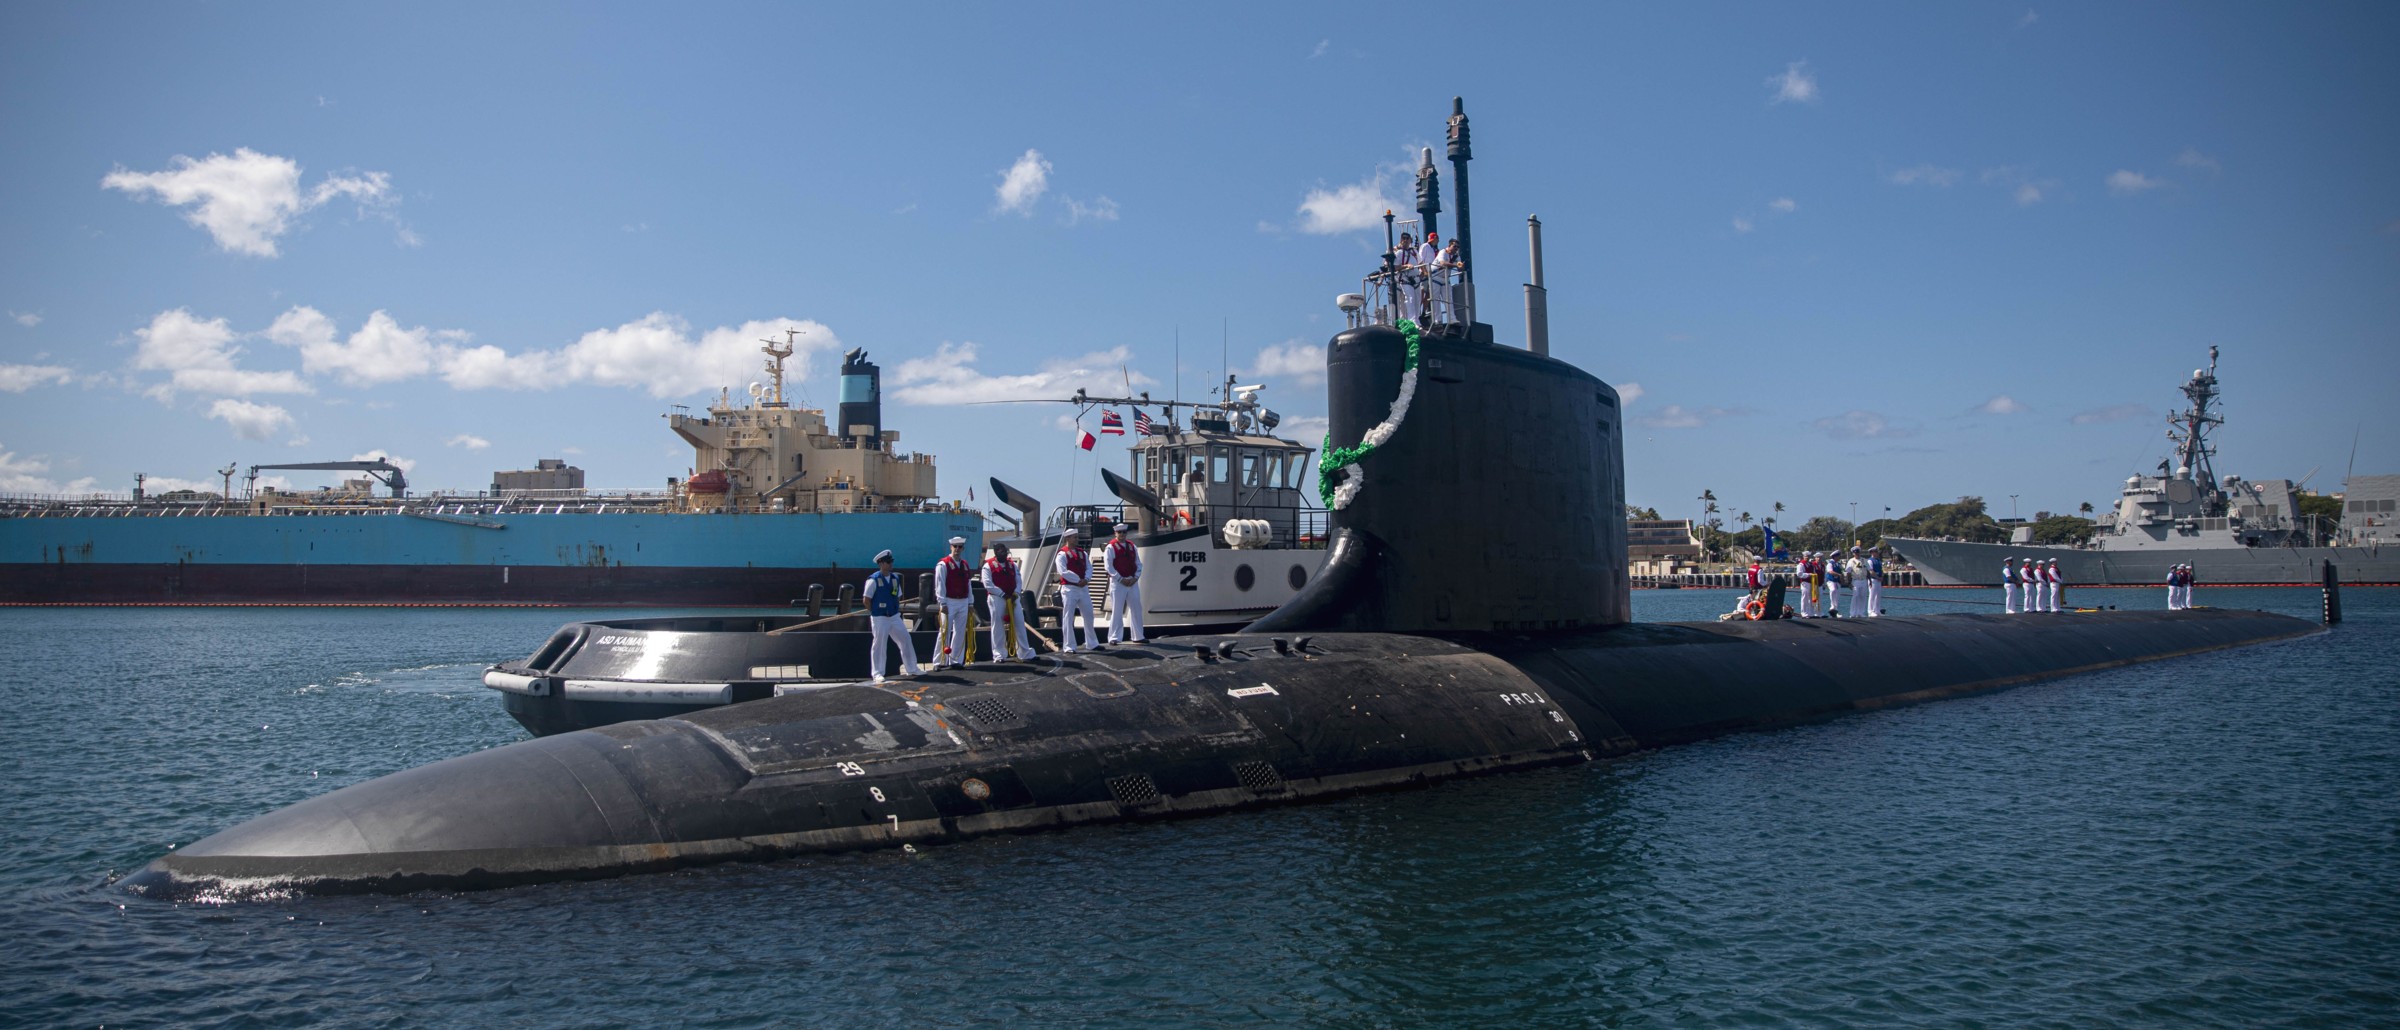 ssn-792 uss vermont virginia class attack submarine us navy joint base pearl harbor hickam hawaii 24